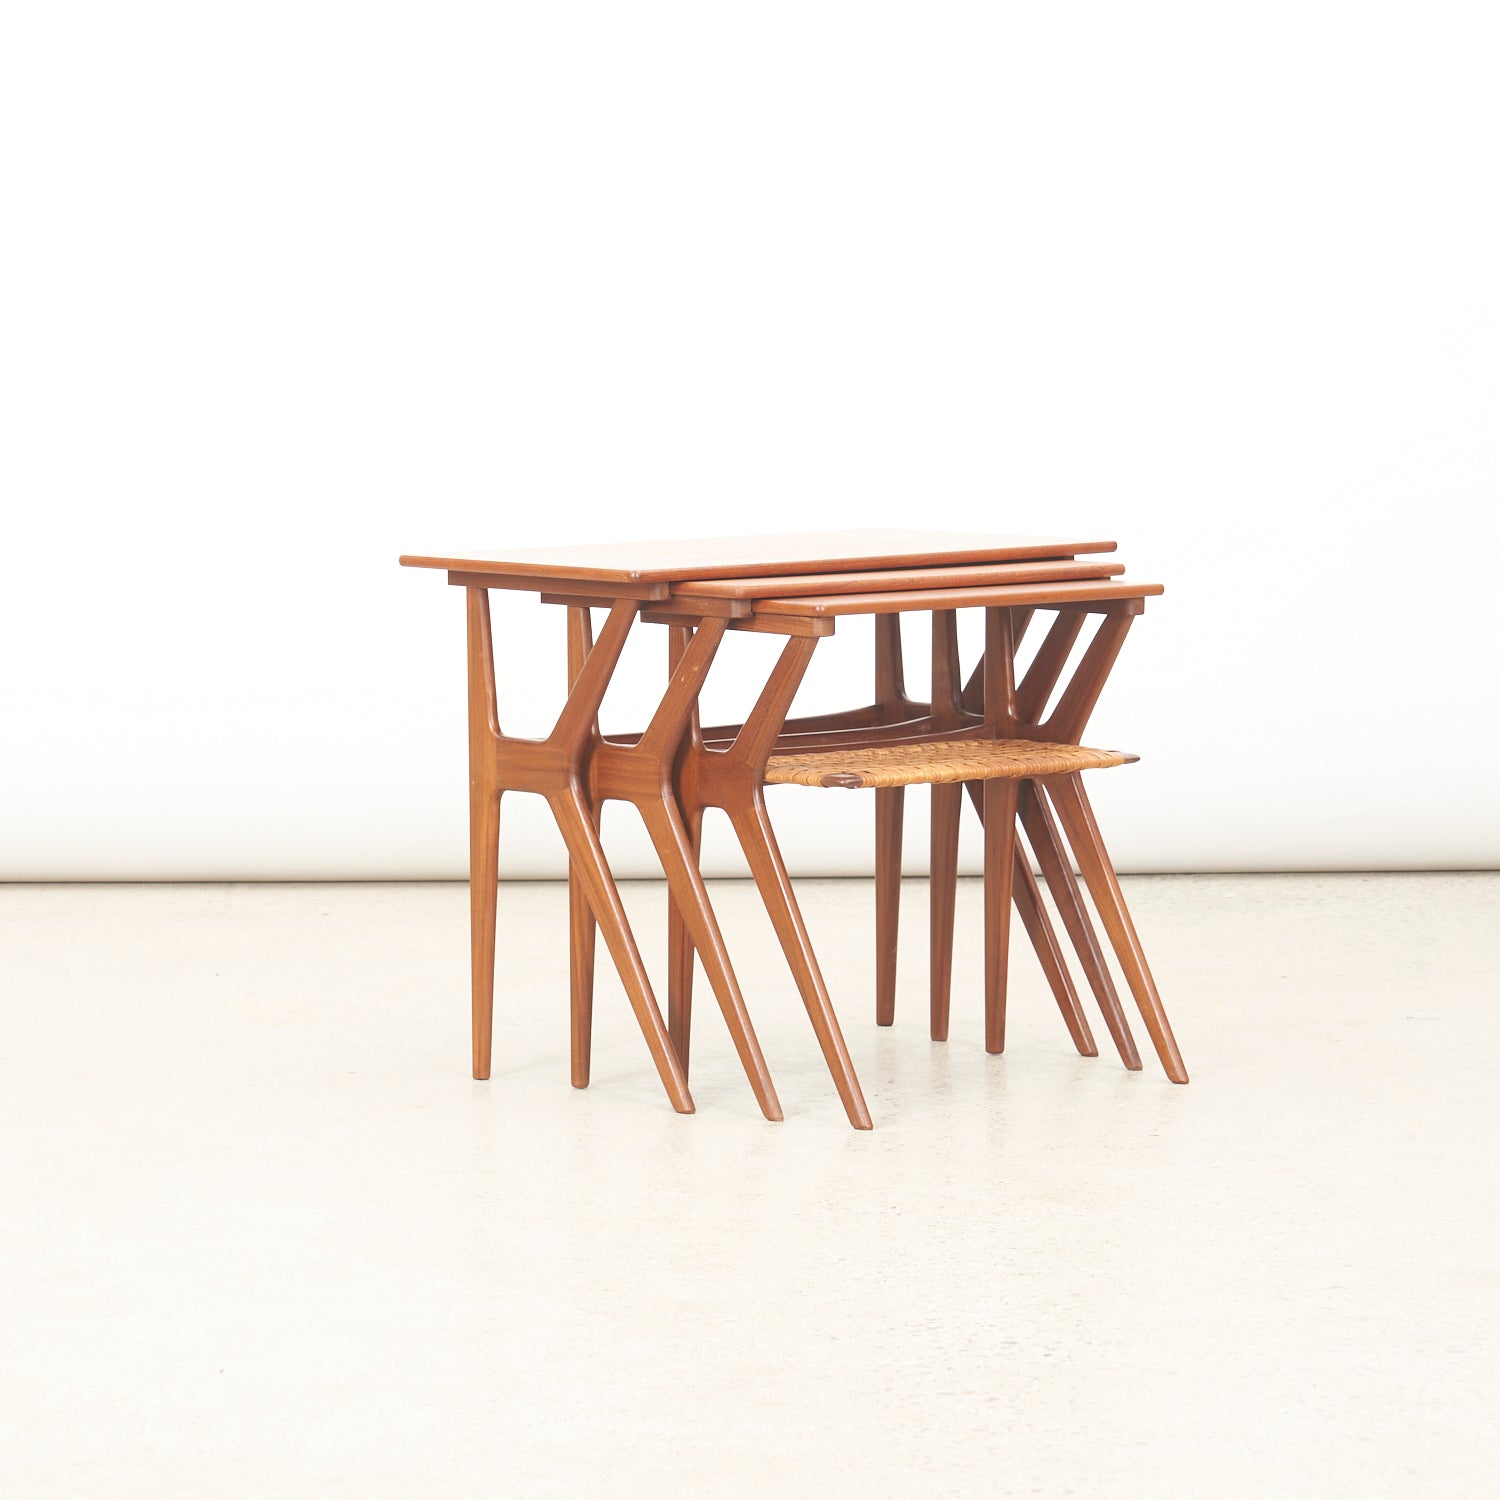 Set of 3 Teak Nesting Tables by Johannes Andersen for CFC Silkeborg, Denmark. Vintage furniture. Danish design. Mid-century modern. Scandinavian modern. 